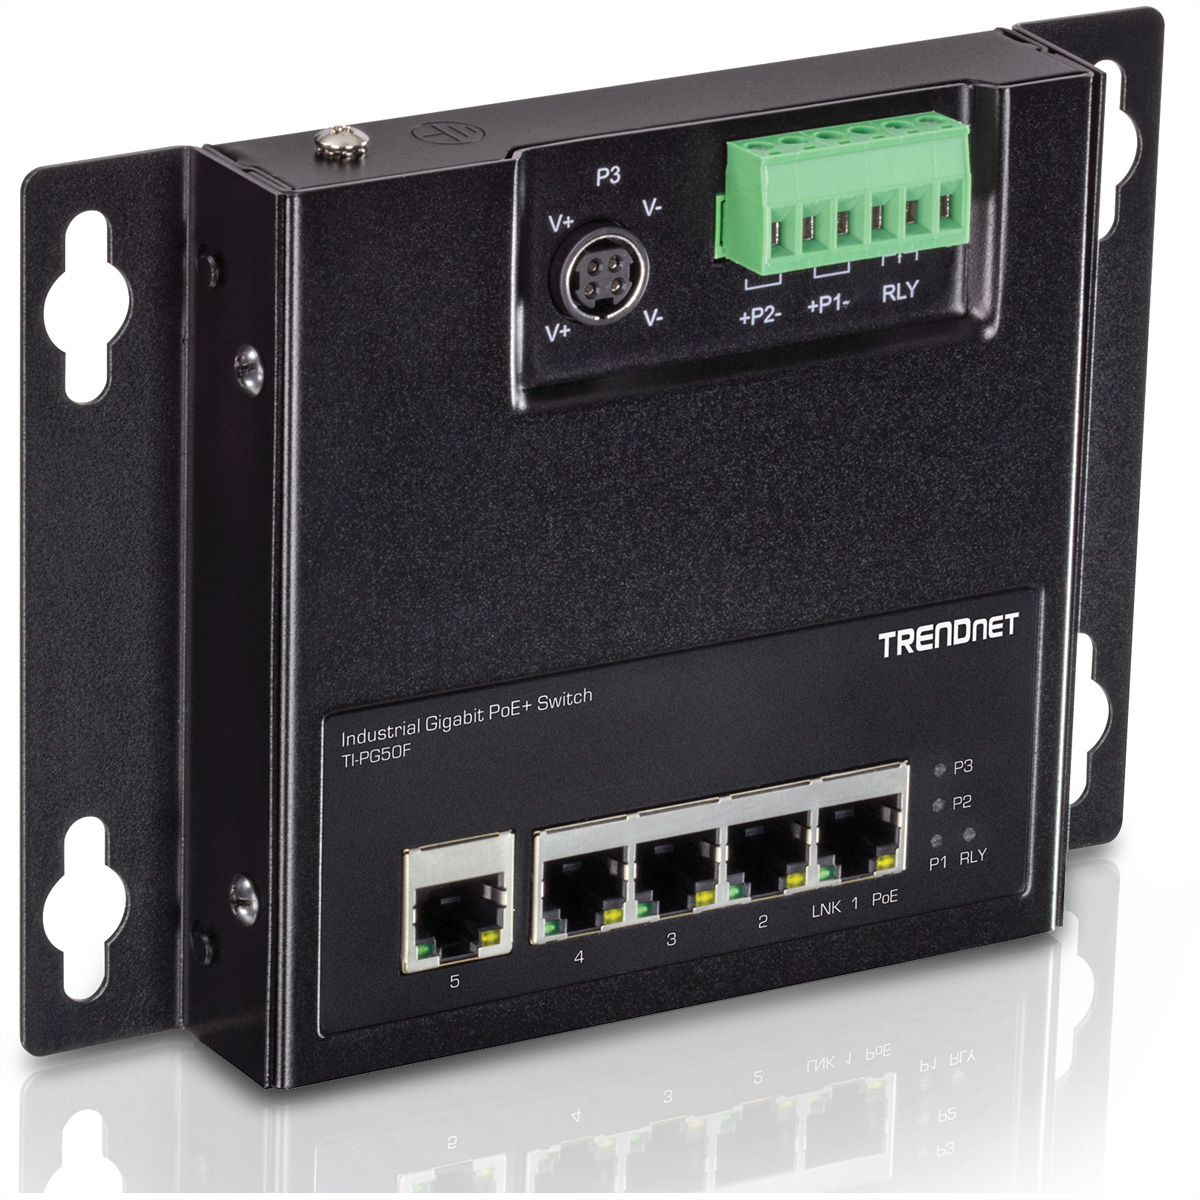 TI-PG50F Gigabit Switch Access TRENDNET 5-Port PoE+ Switch Front Industrial PoE Gigabit